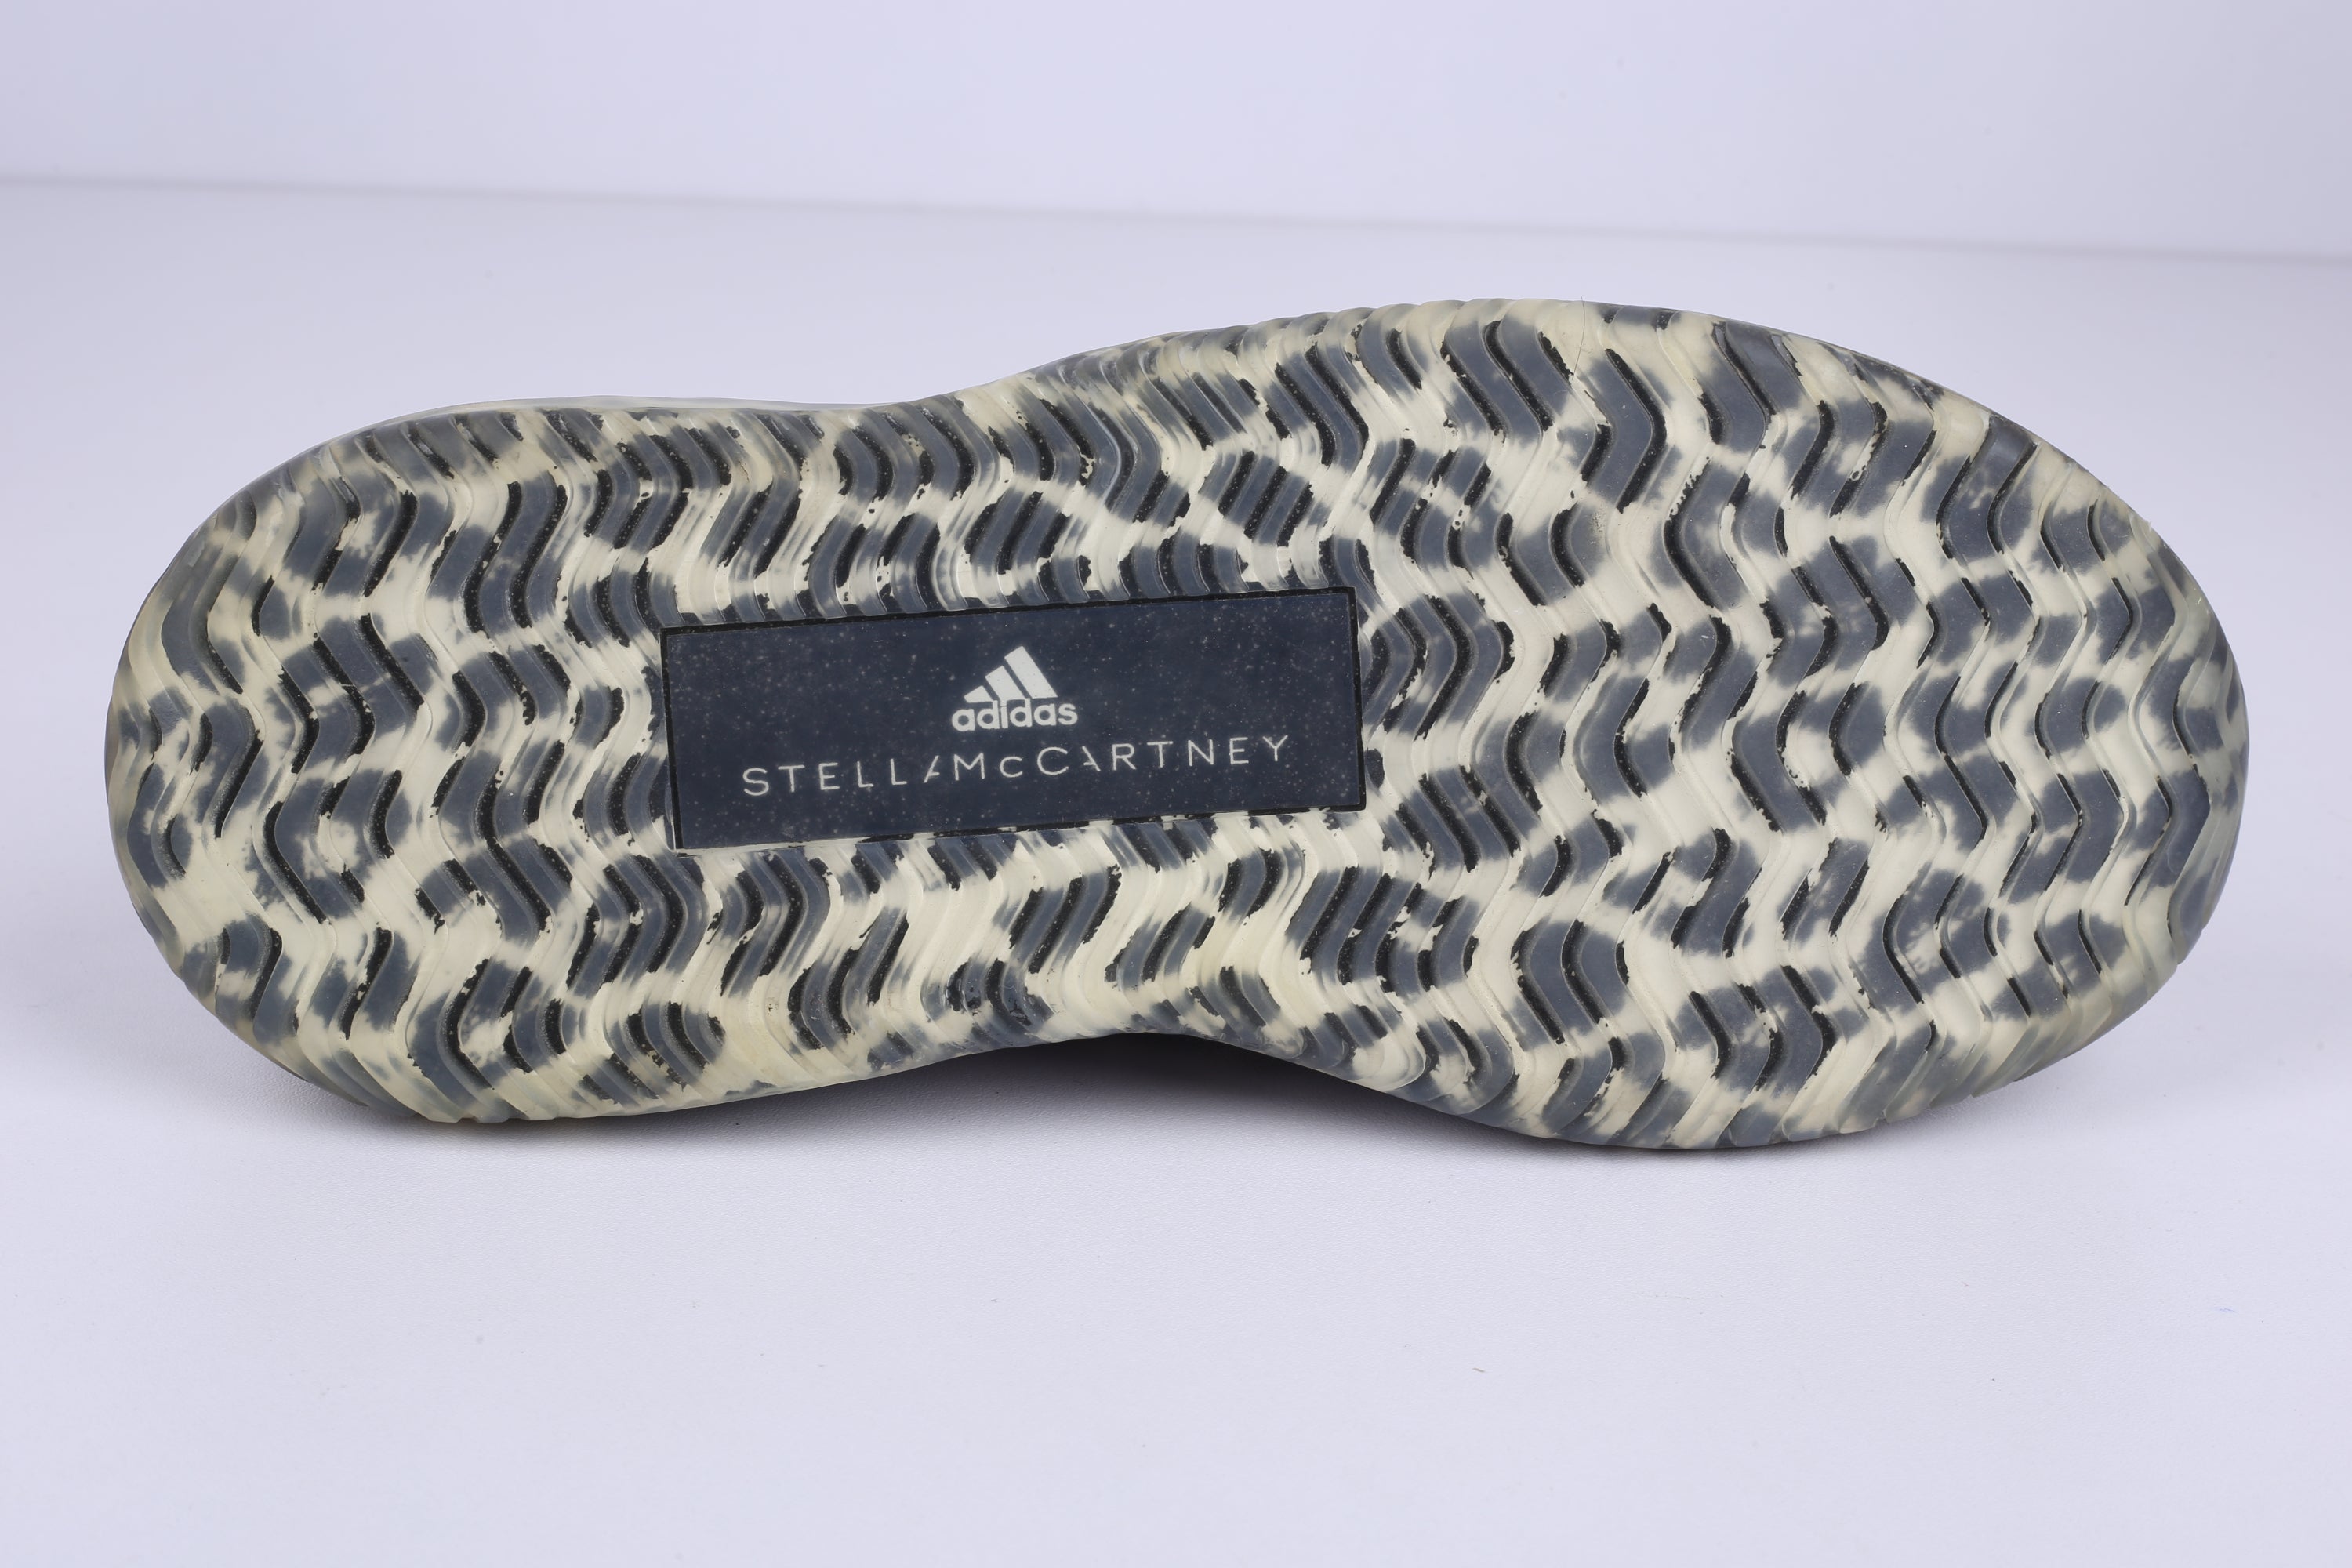 Adidas Stella McCartney Sneaker  - (Condition Premium*)